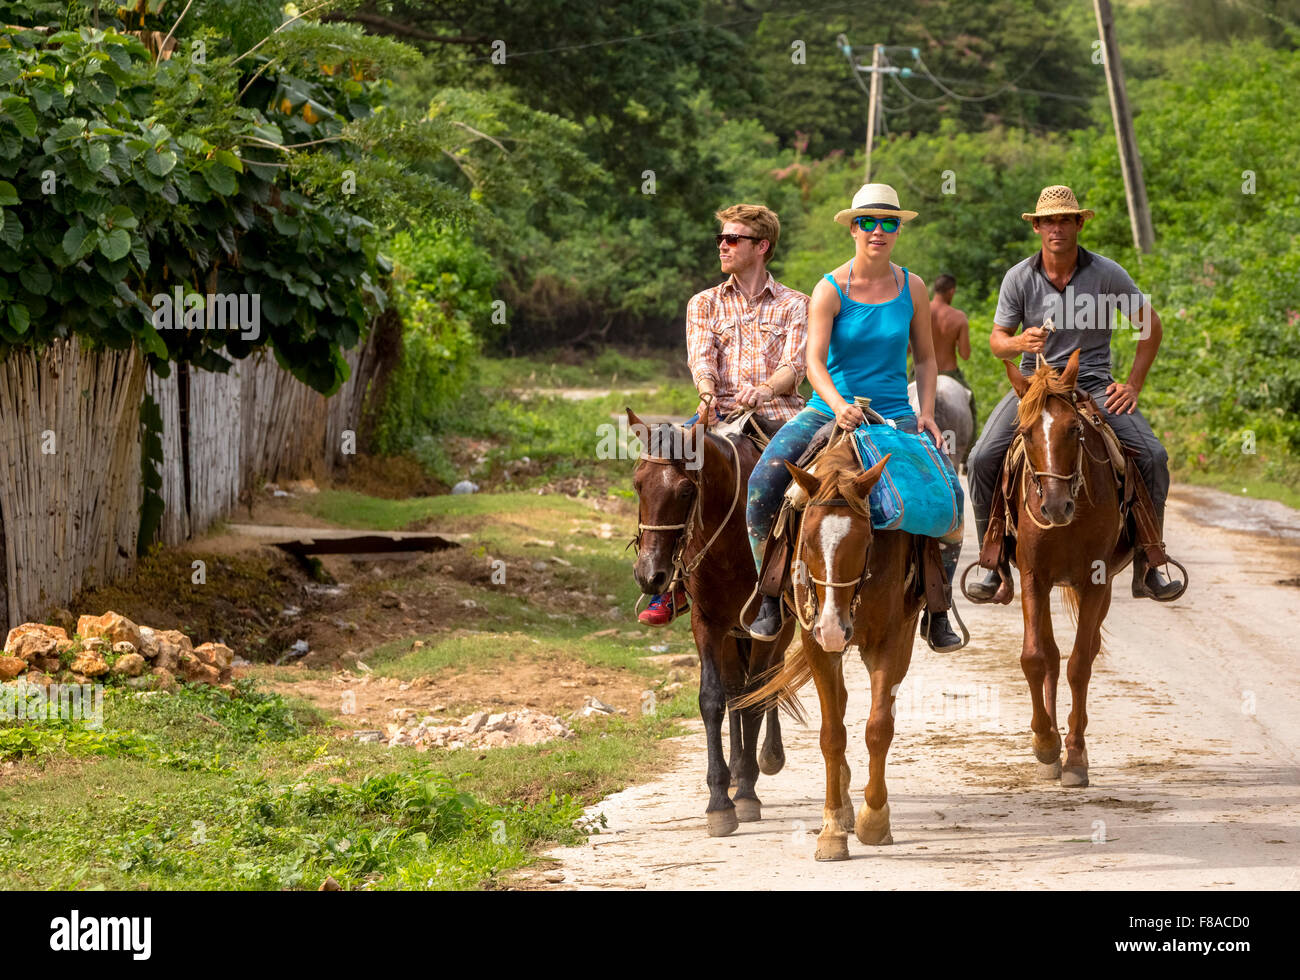 Touristen mit einem Pferd Reiten in das Valle de Los Ingenios, Straßenszene, Trinidad, Pflaster, Trinidad, Kuba, Sancti Spíritus, Stockfoto